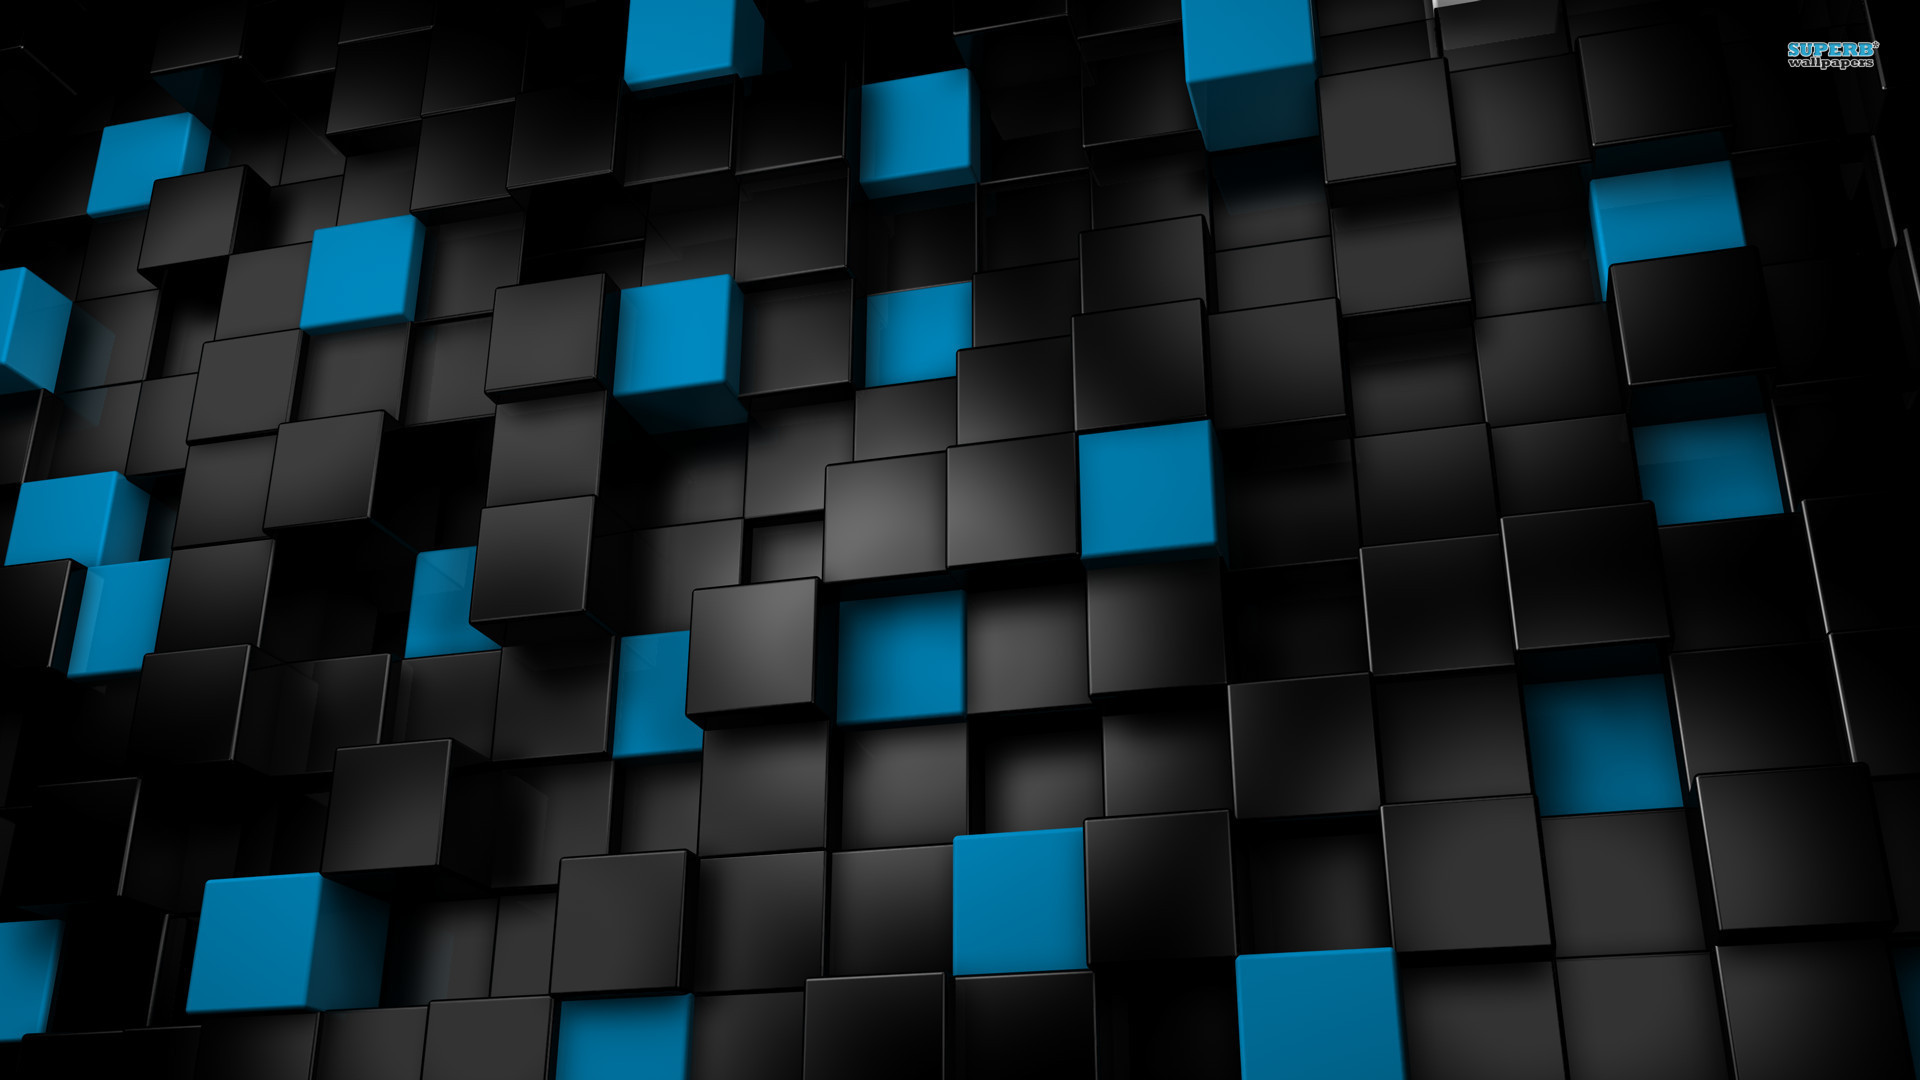 Cube Wallpaper 34924 1600x900 px